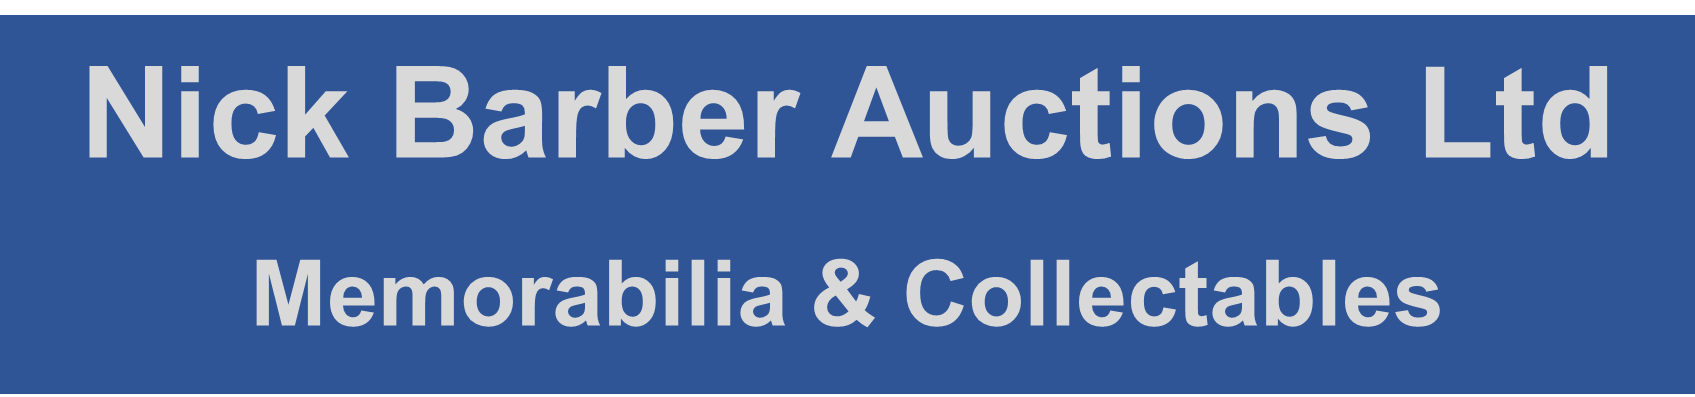 Nick Barber Auctions Ltd logo